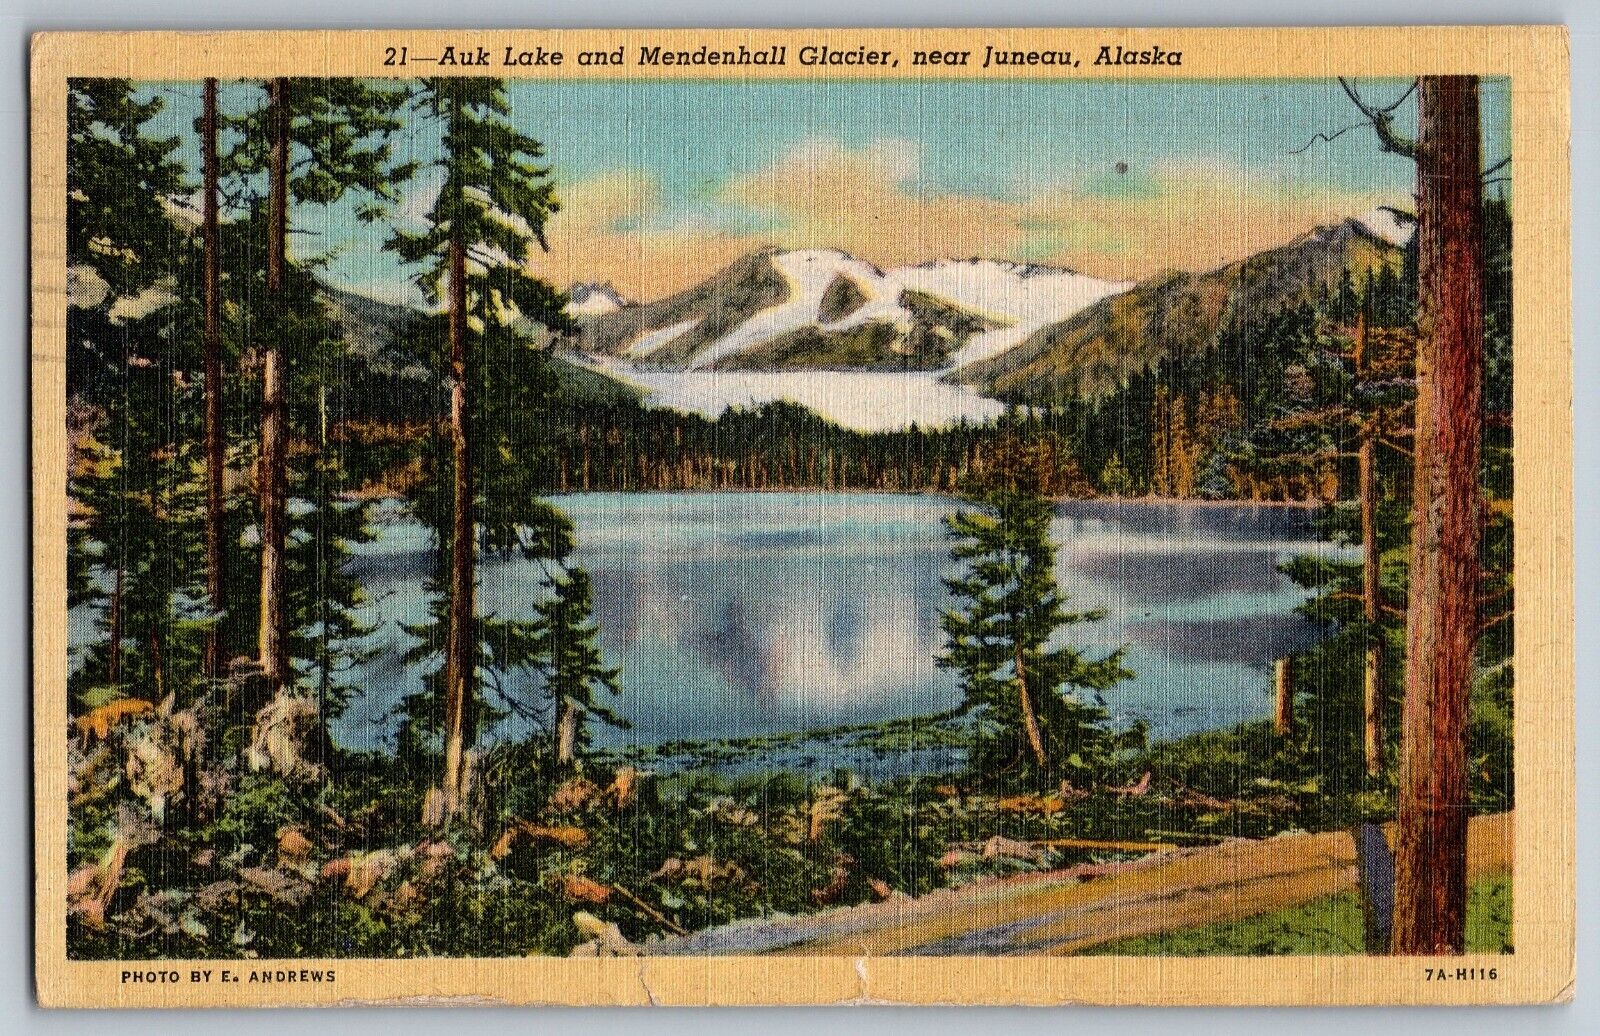 Juneau, Alaska - Auk Lake and Mendenhall Glacier - Vintage Postcard - Posted